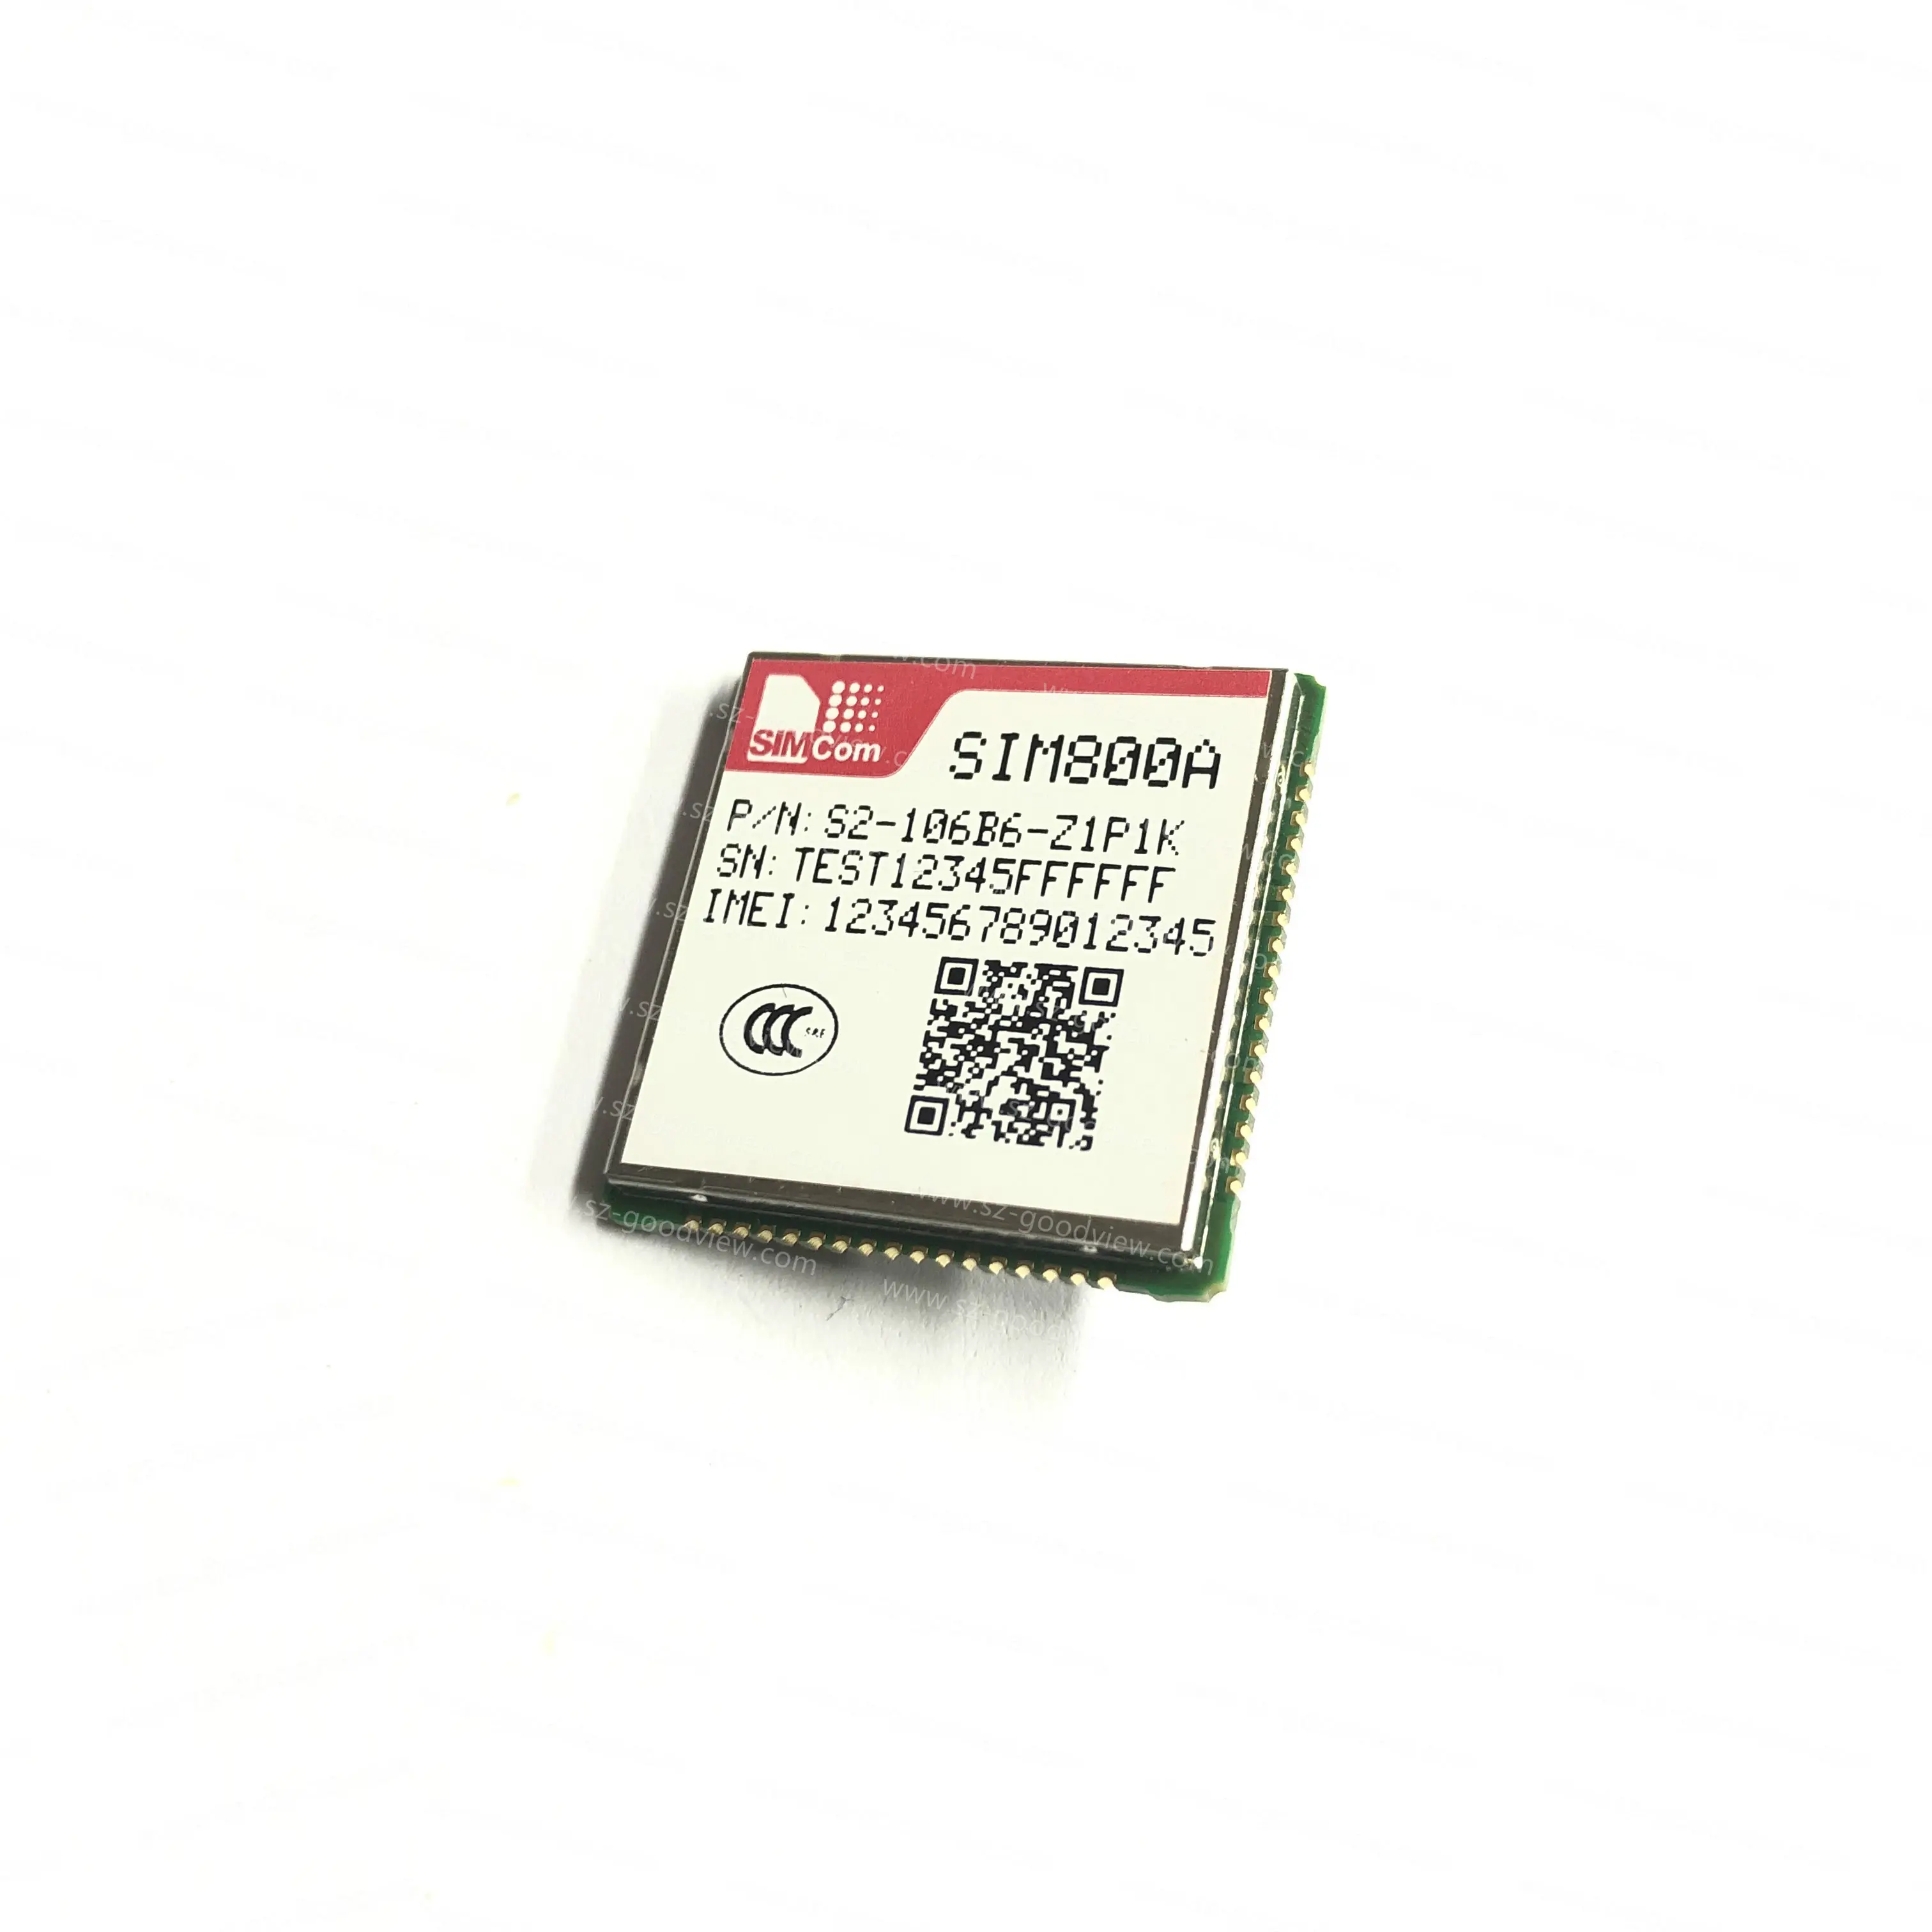 SIM800A 2g modulo GSM GPRS/modem/chip